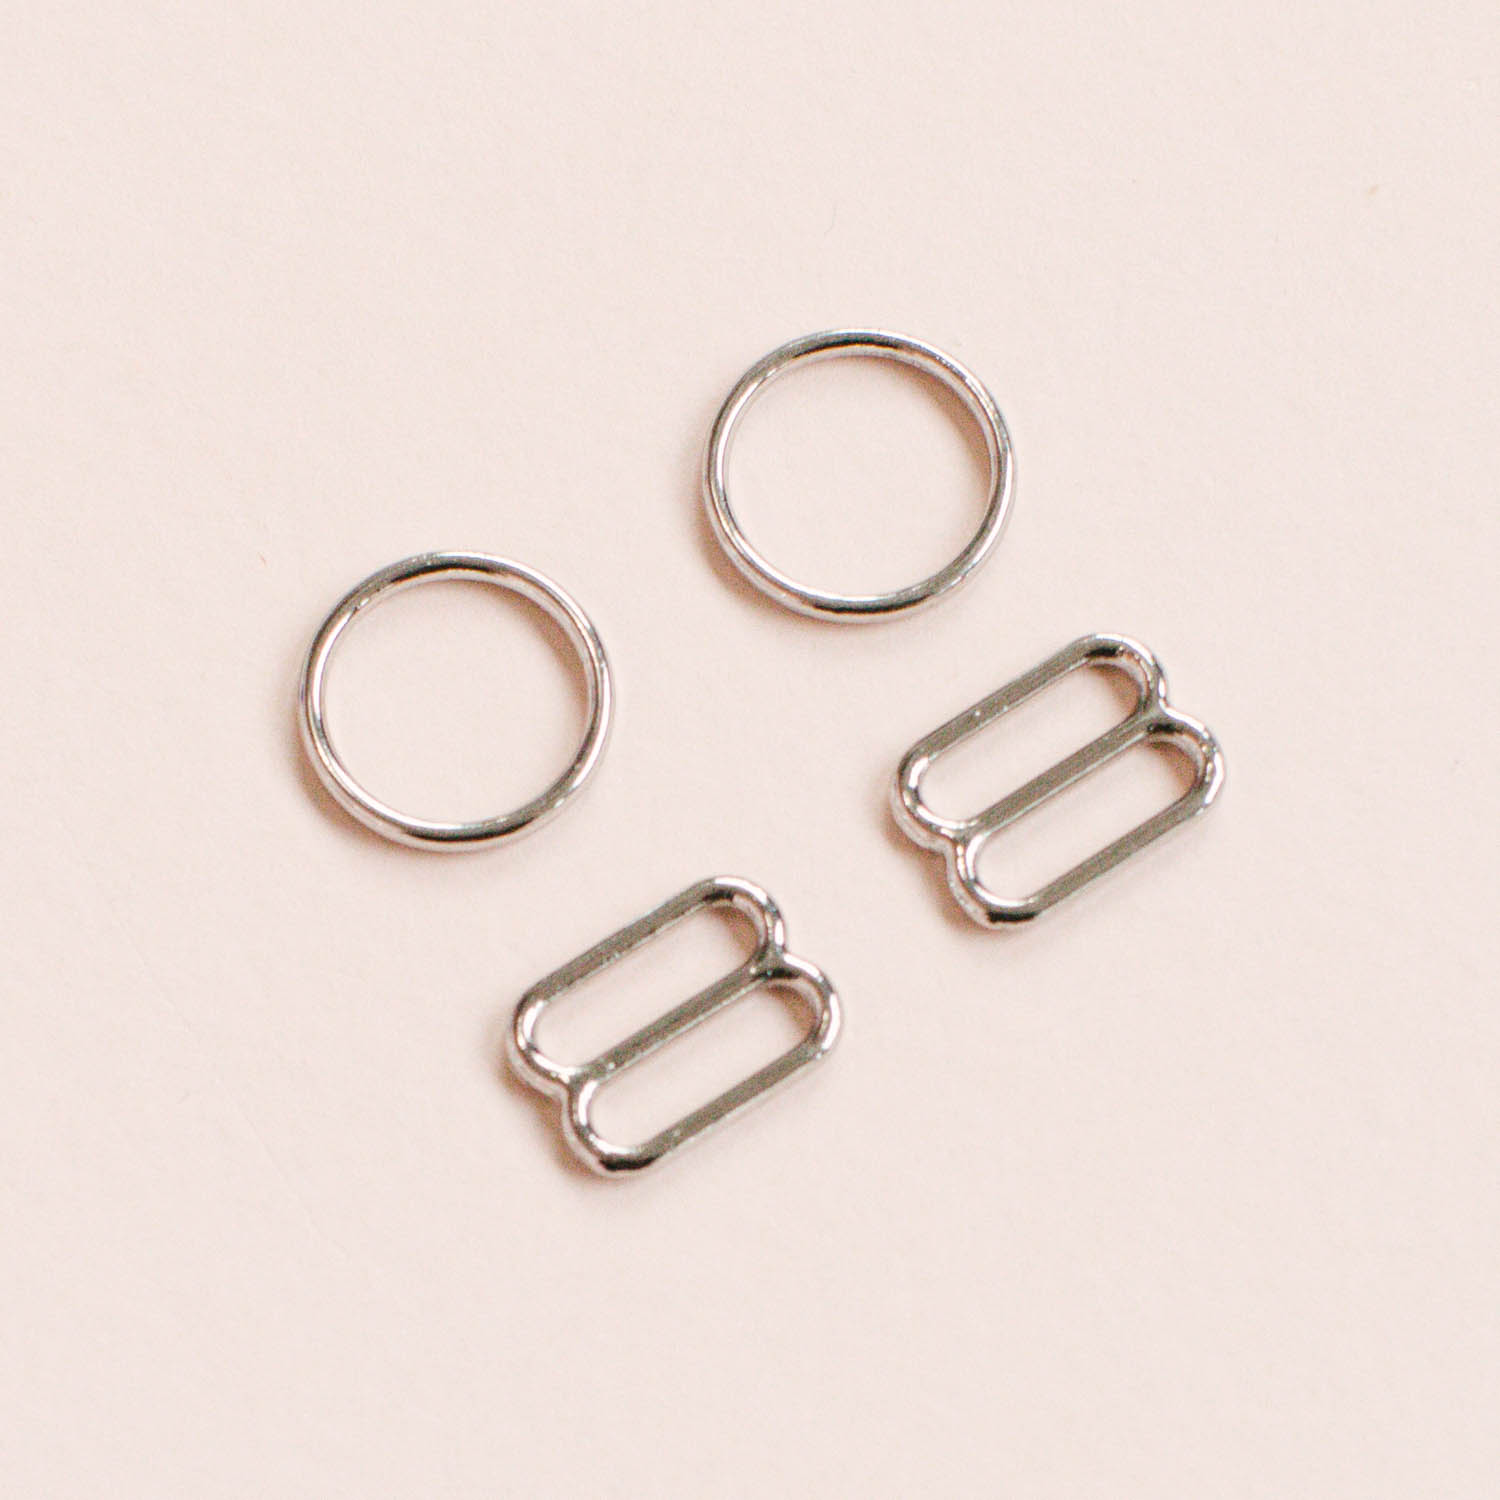 Bra Making Supplies by Madalynne Intiamtes: Silver Ring + Slider Set